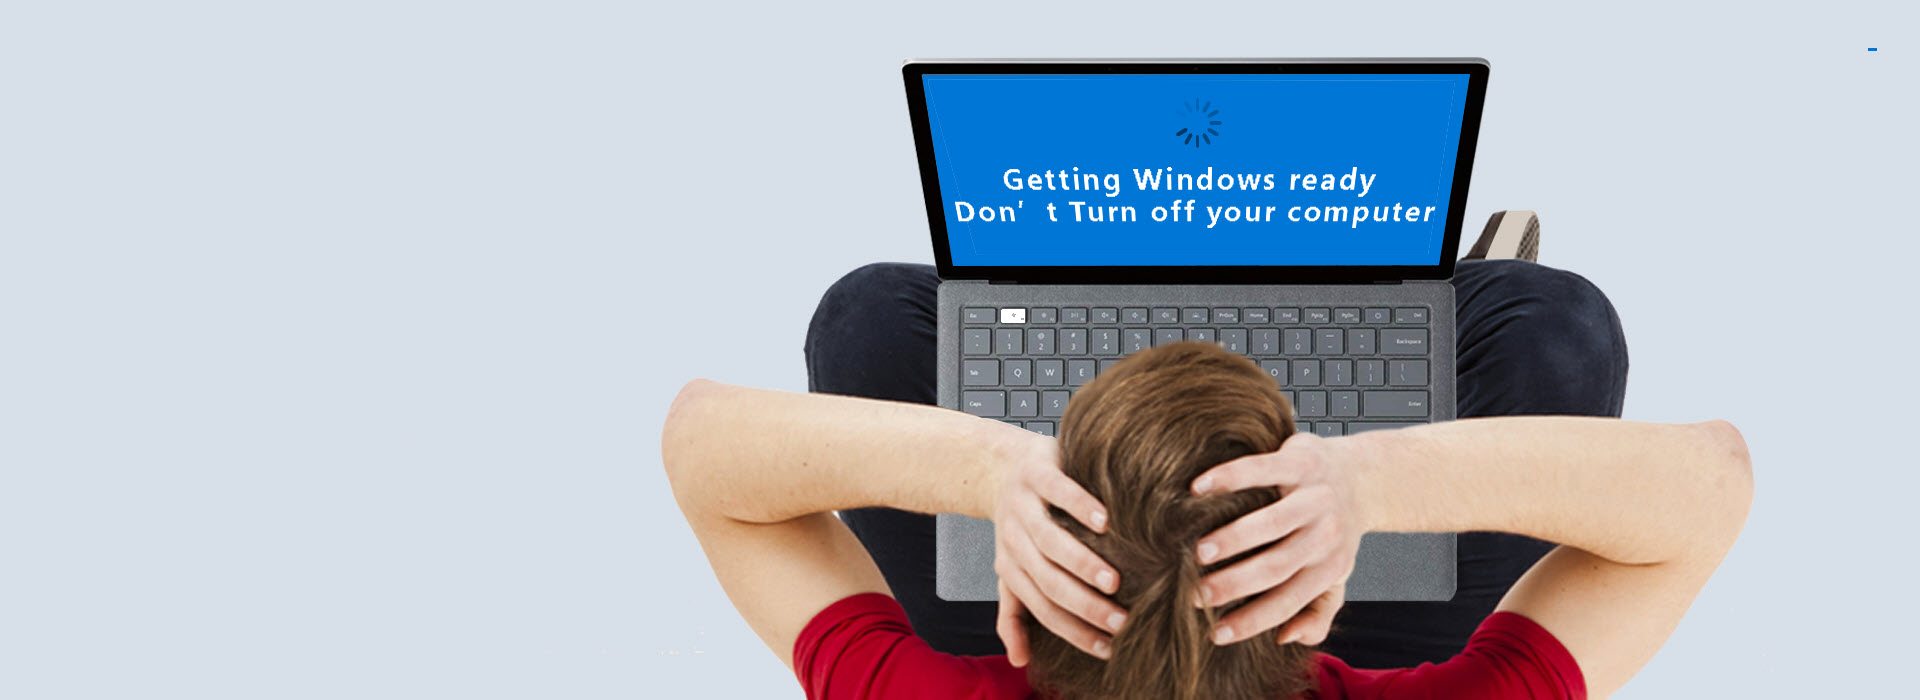 windows 10 updates every day